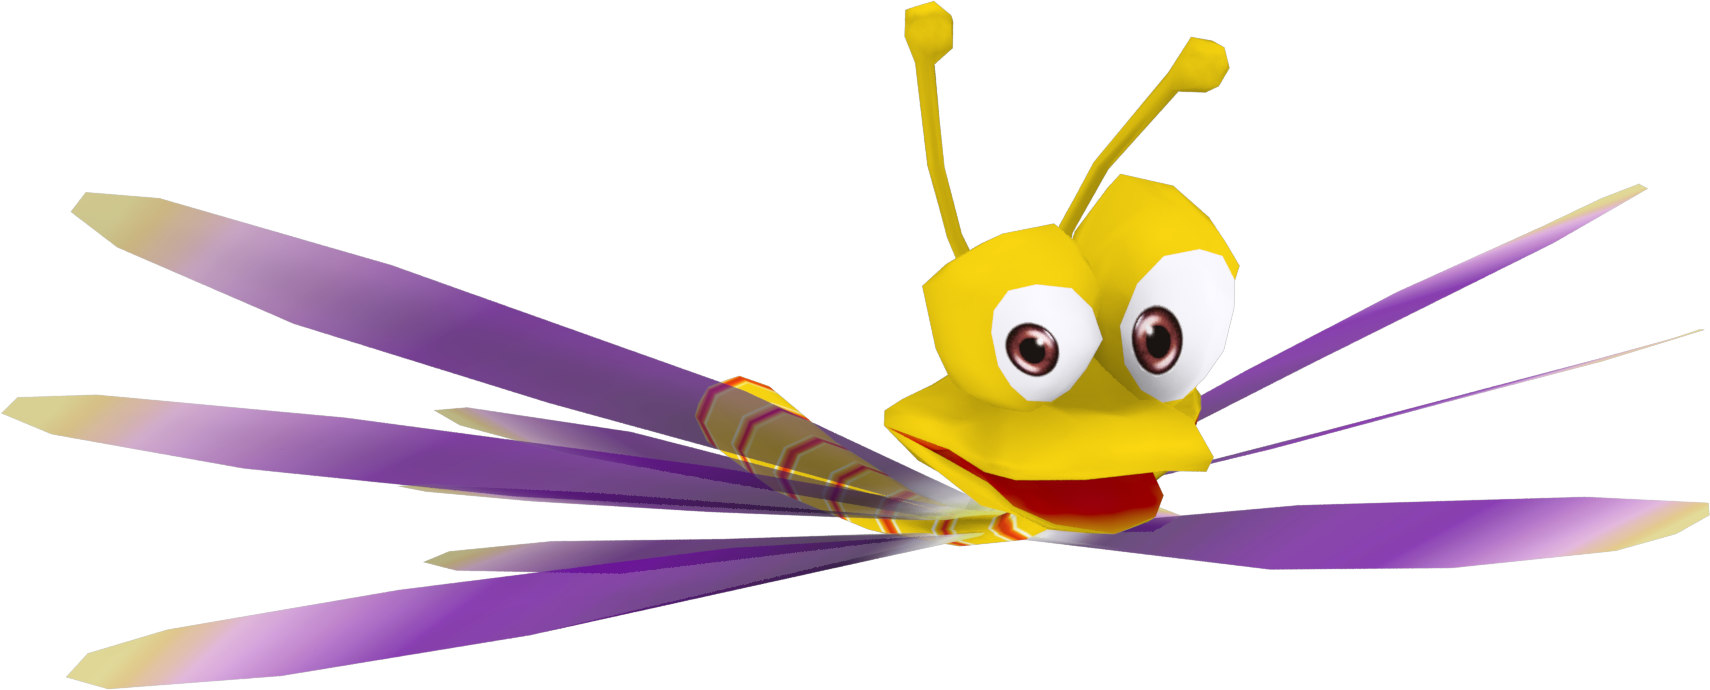 Sparx Render By Crasharki - Spyro Enter The Dragonfly Sparx (1710x690)